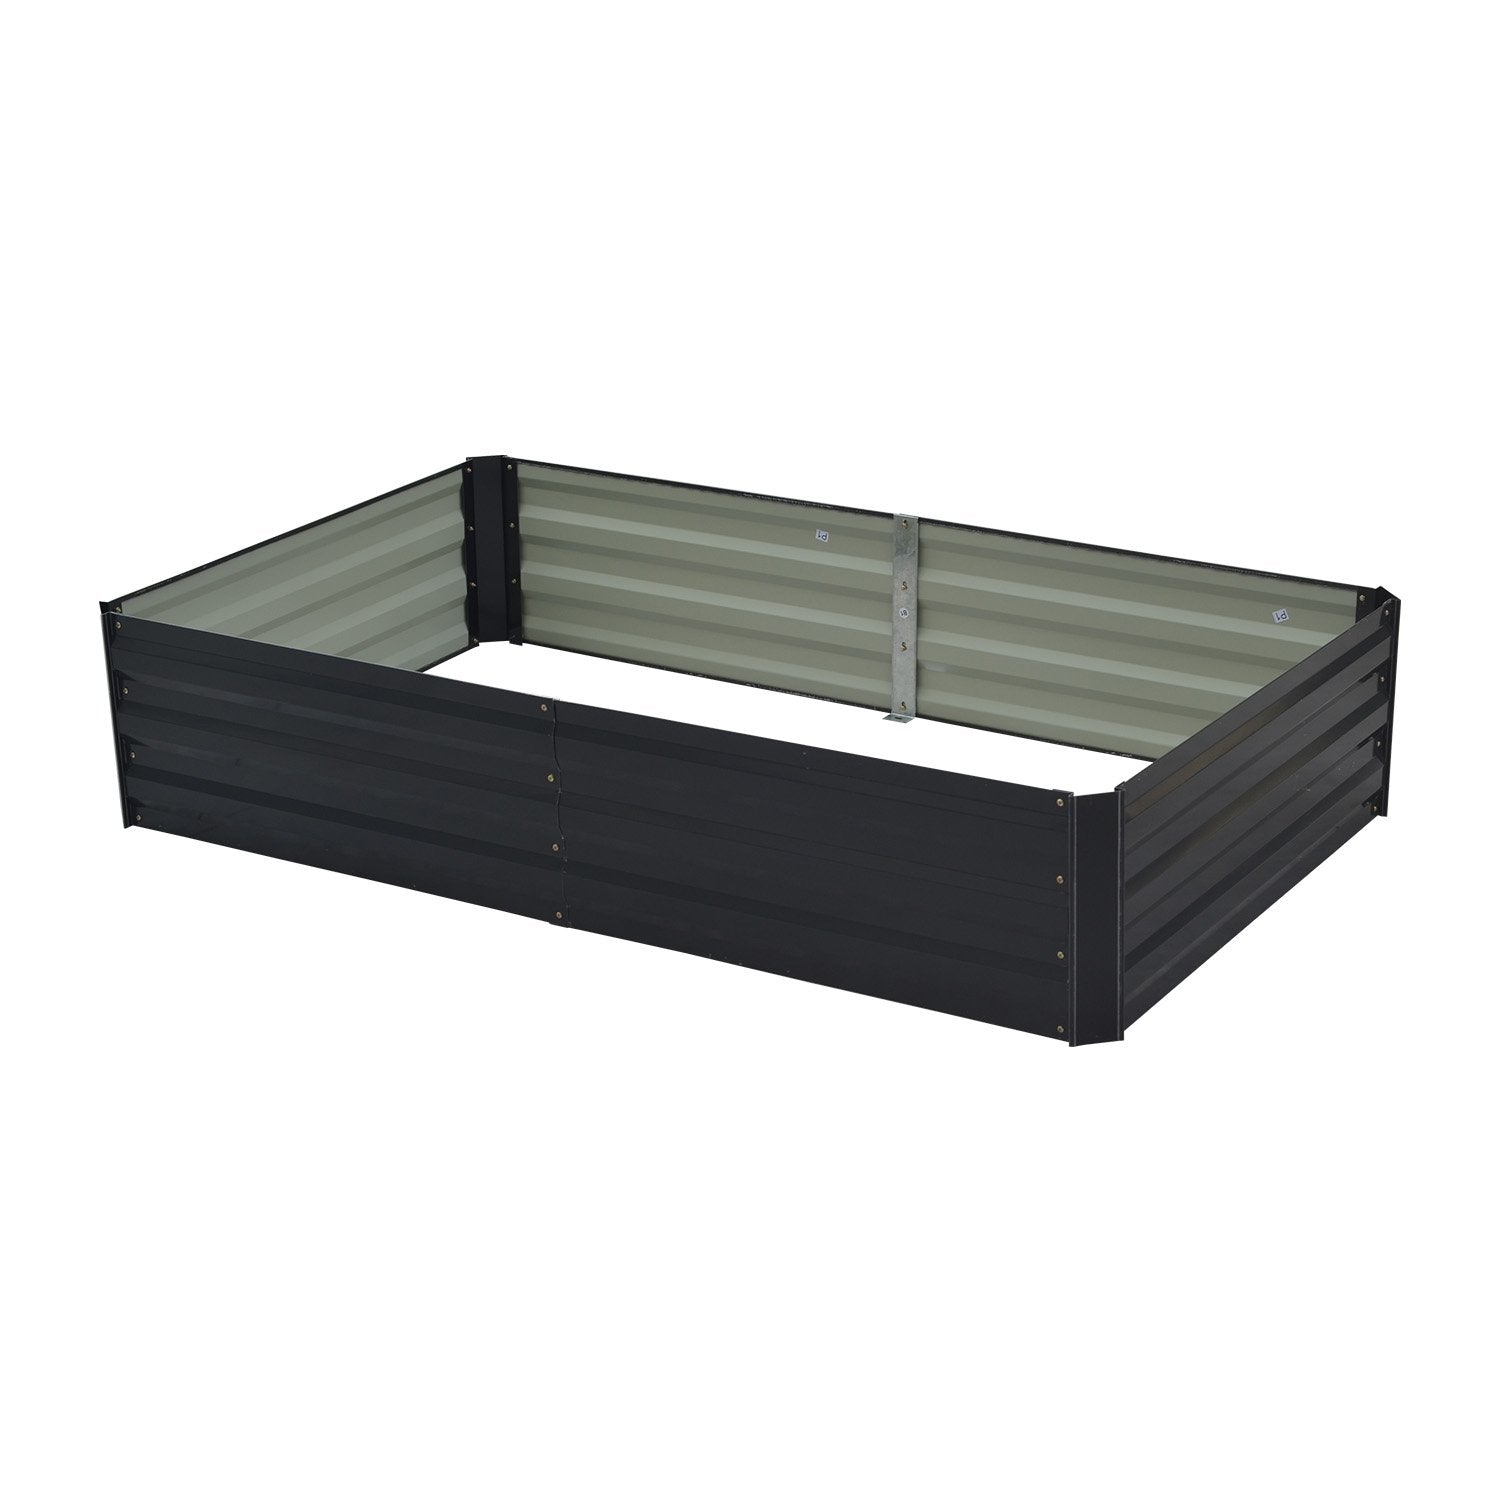 Wallaroo 150 x 90 x 30cm Galvanized Steel Garden Bed - Black - SILBERSHELL